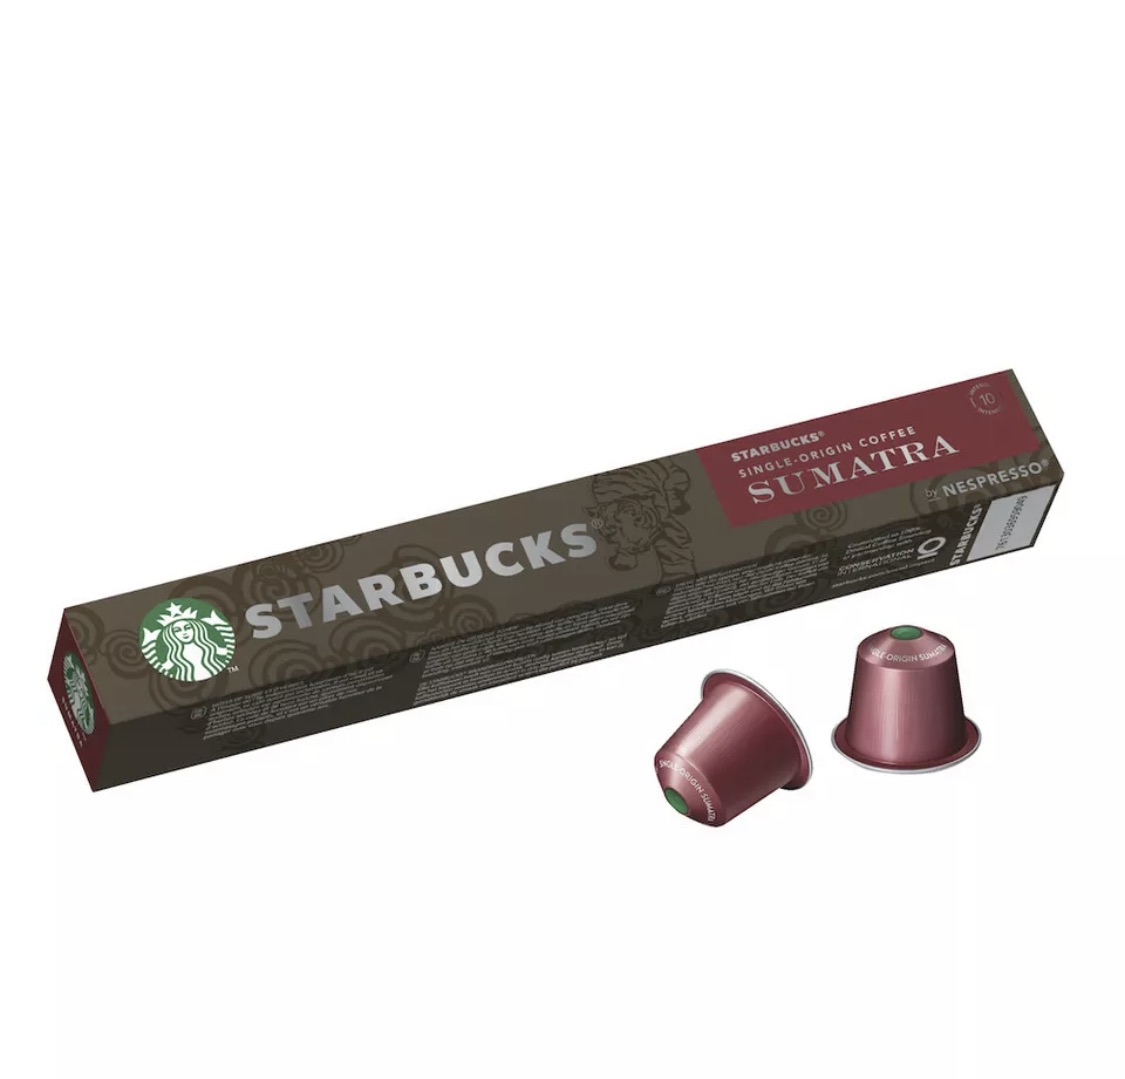 Starbucks Sumatra สตาร์บัคส์แคปซูล แคปซูลกาแฟสตาร์บัคส์ STARBUCKS CAPSULE FOR NESPRESSO *** หมดอายุ 09-11/2021